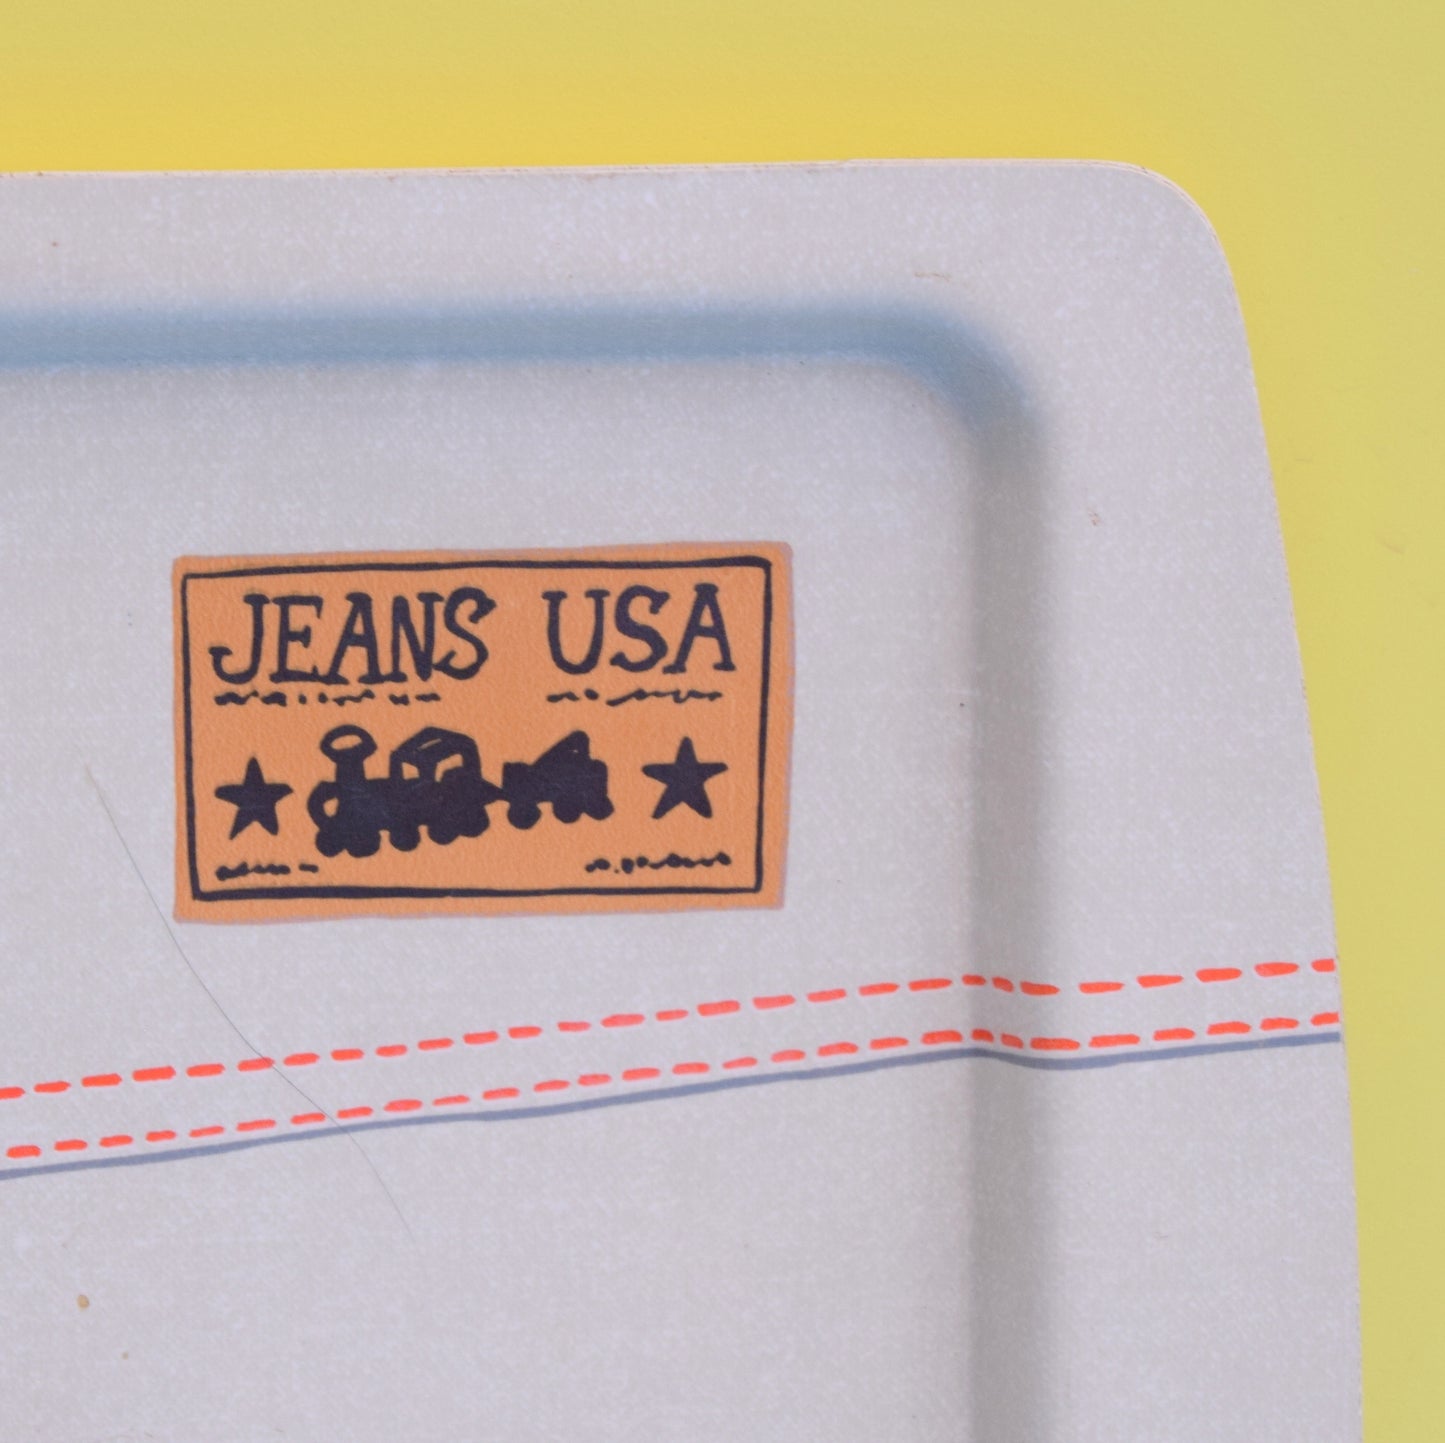 Vintage 1970s Jeans USA Tray - Hanky In Pocket Design